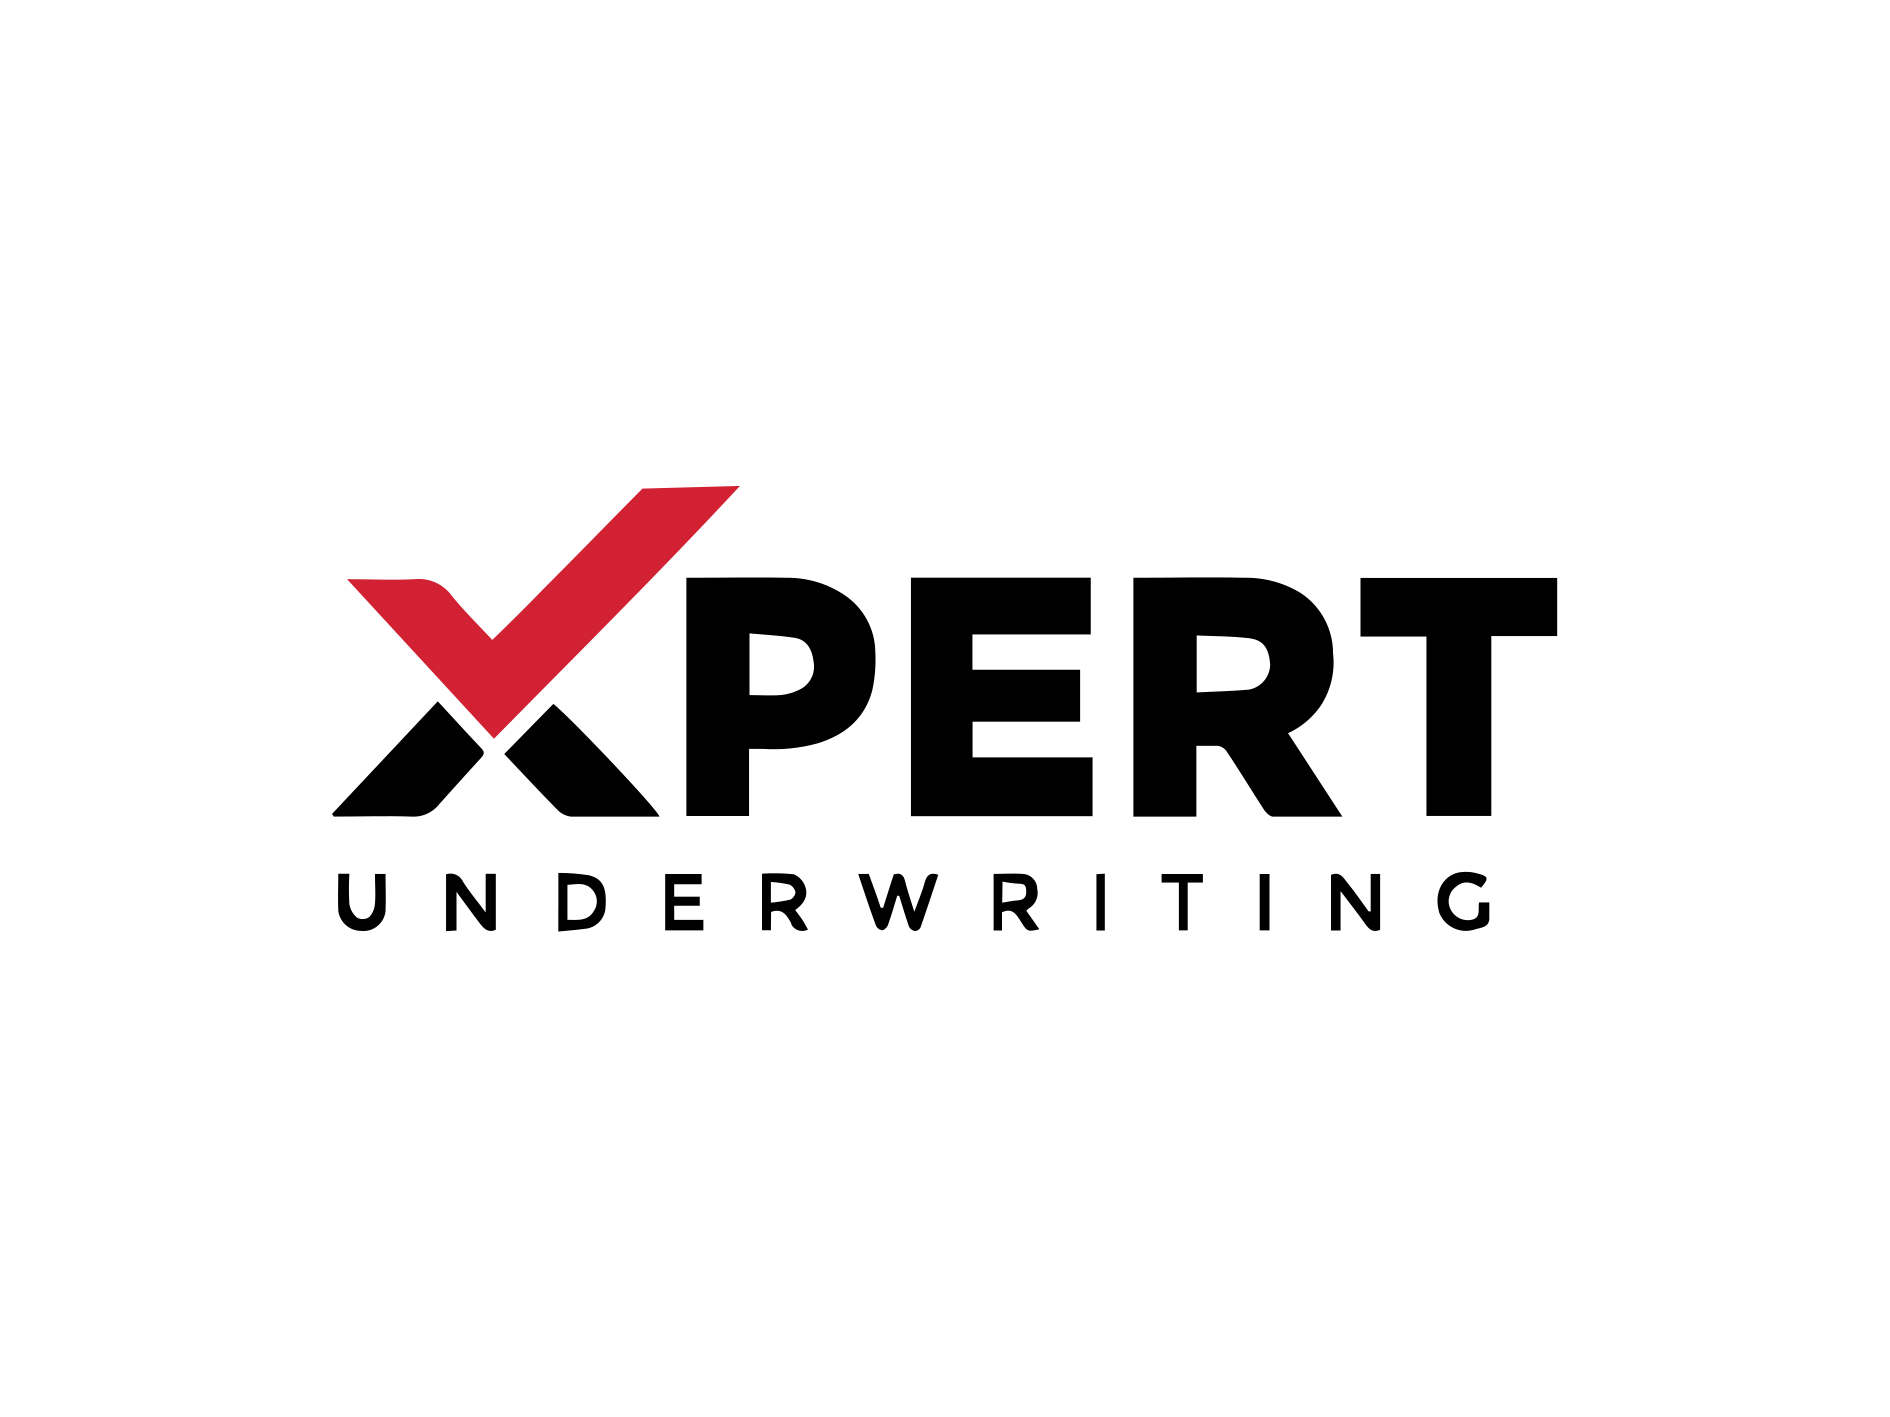 Xpert Underwriting